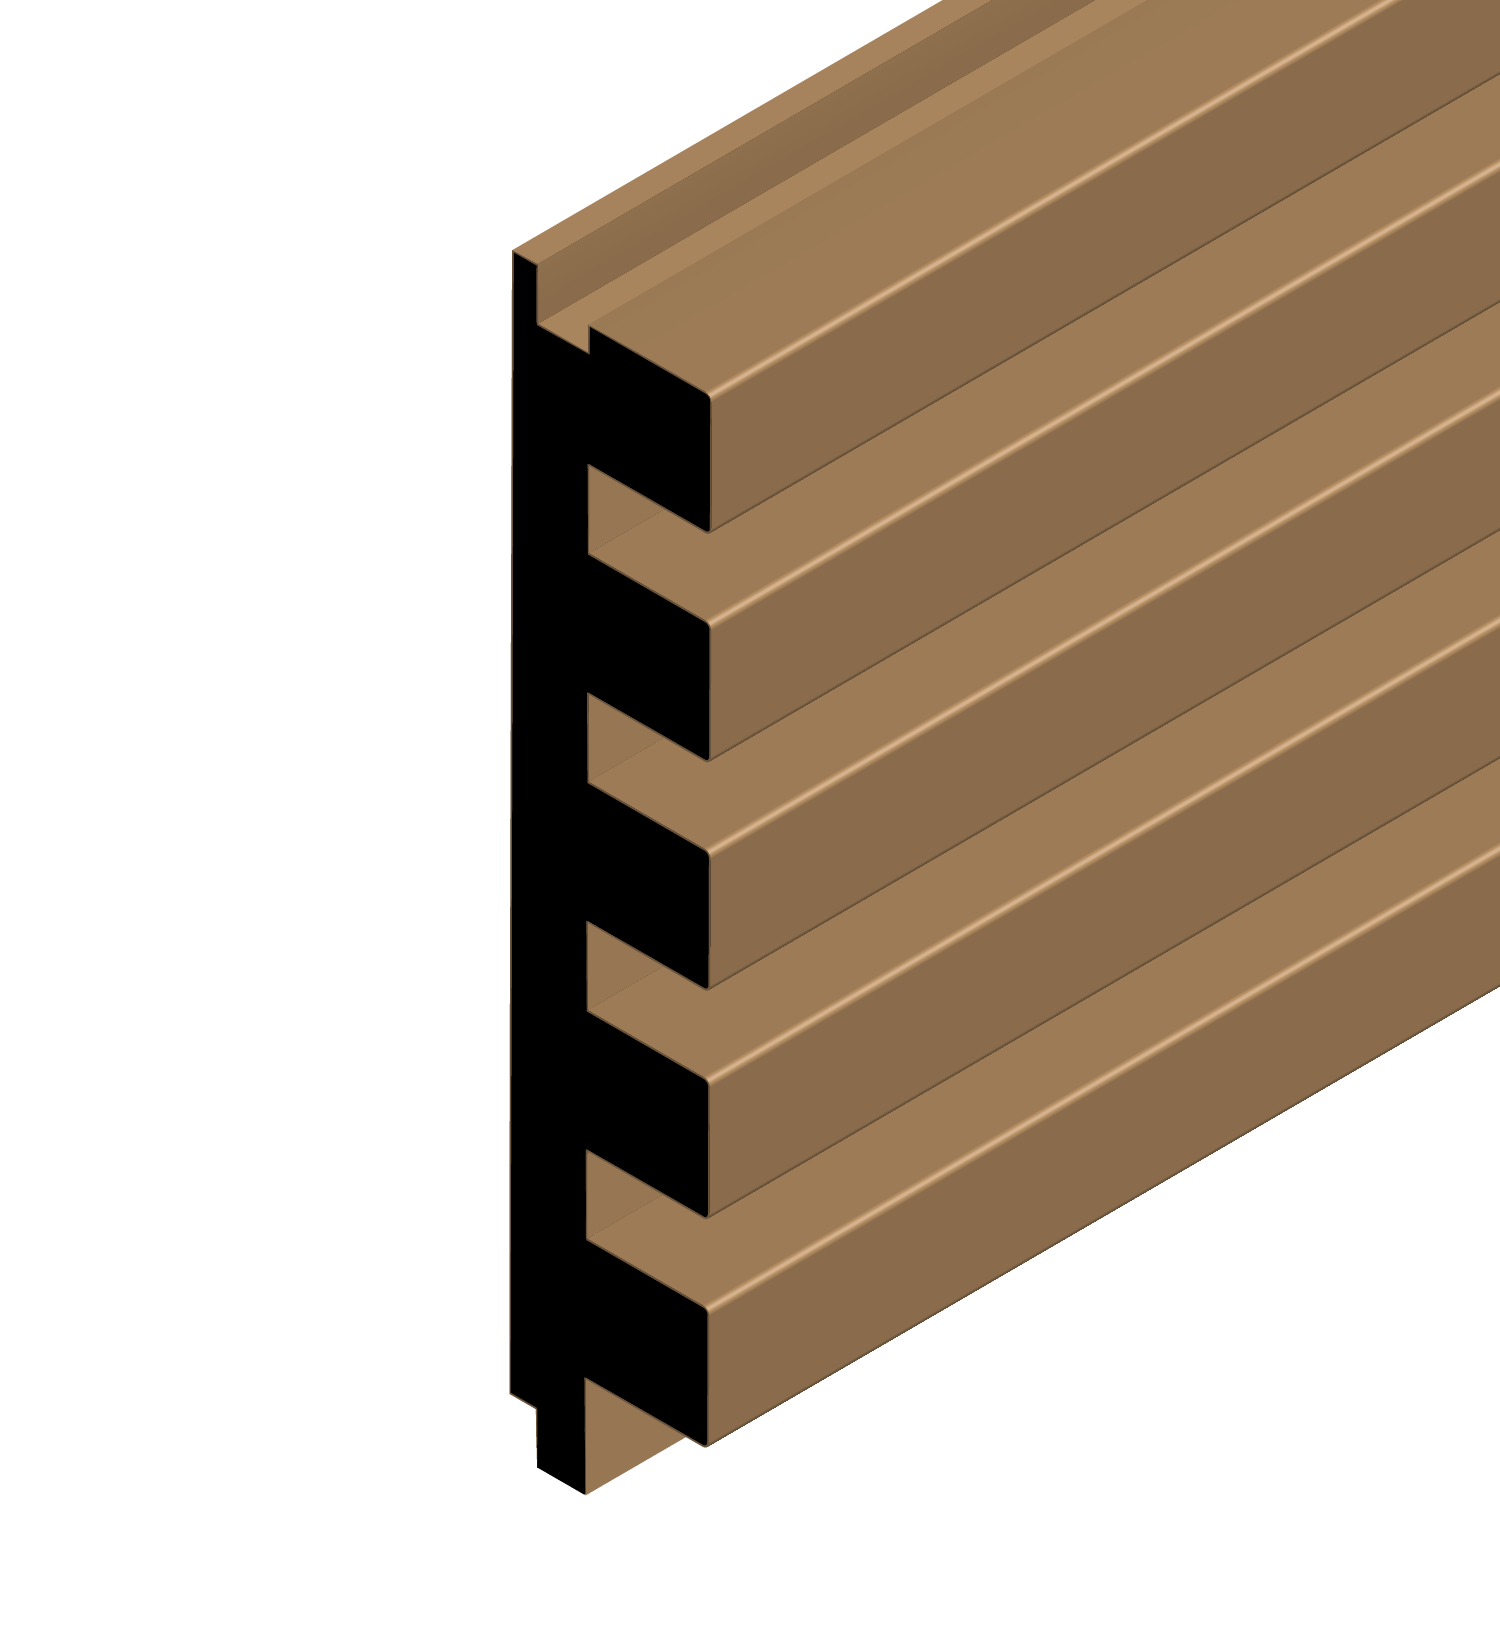 slat-wall-panel